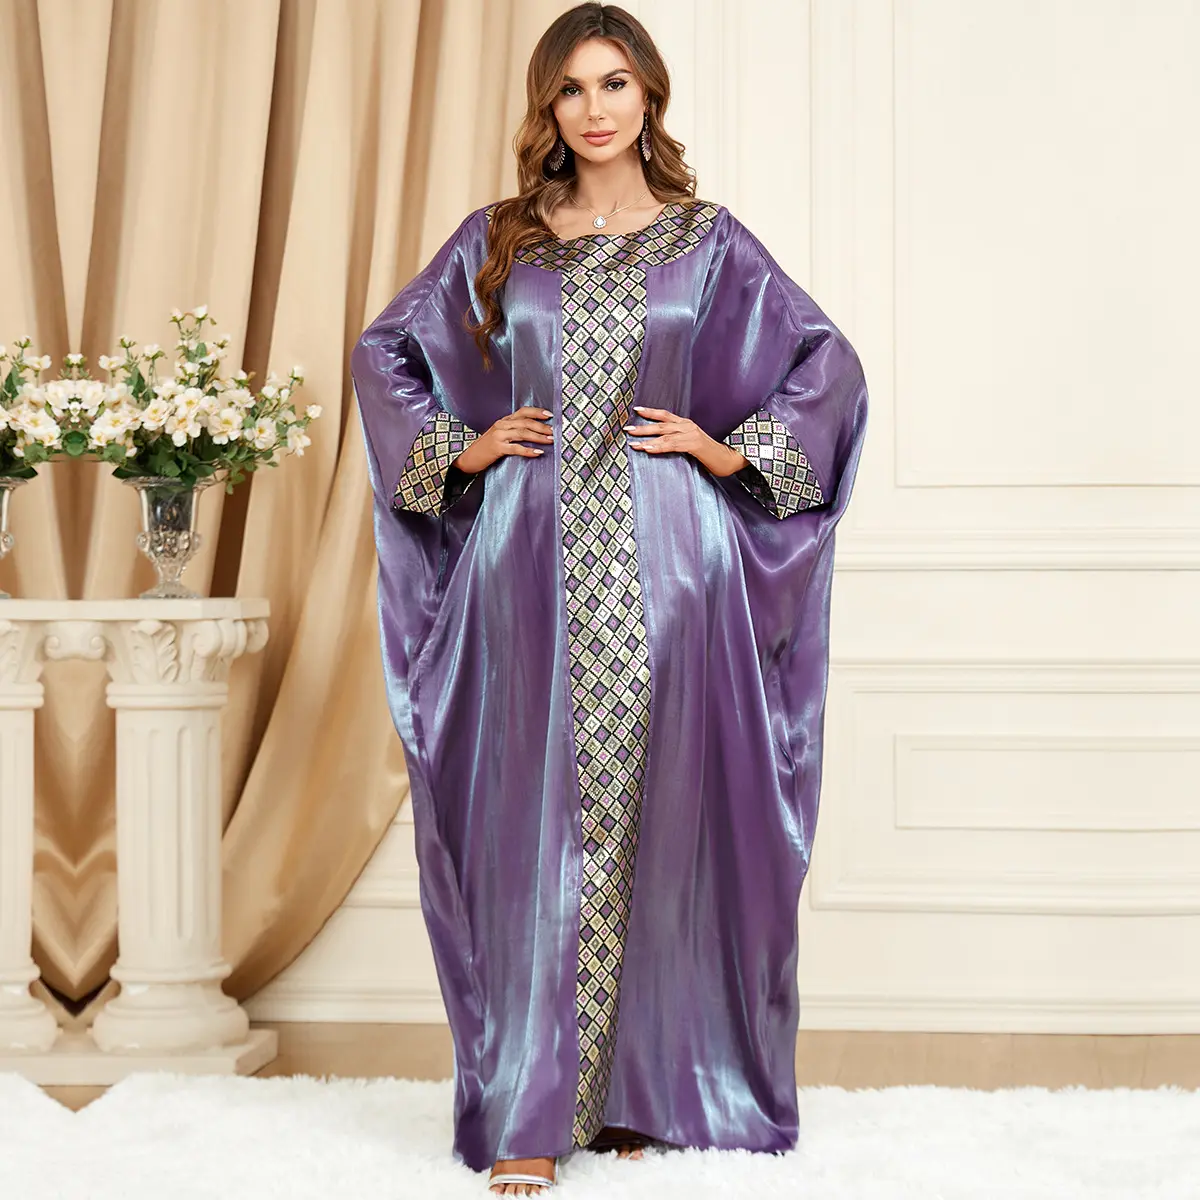 U.Chic moyen-orient couleur unie patché manches chauve-souris musulman grande robe femmes robe Maxi Abaya robe musulmane vêtements islamiques